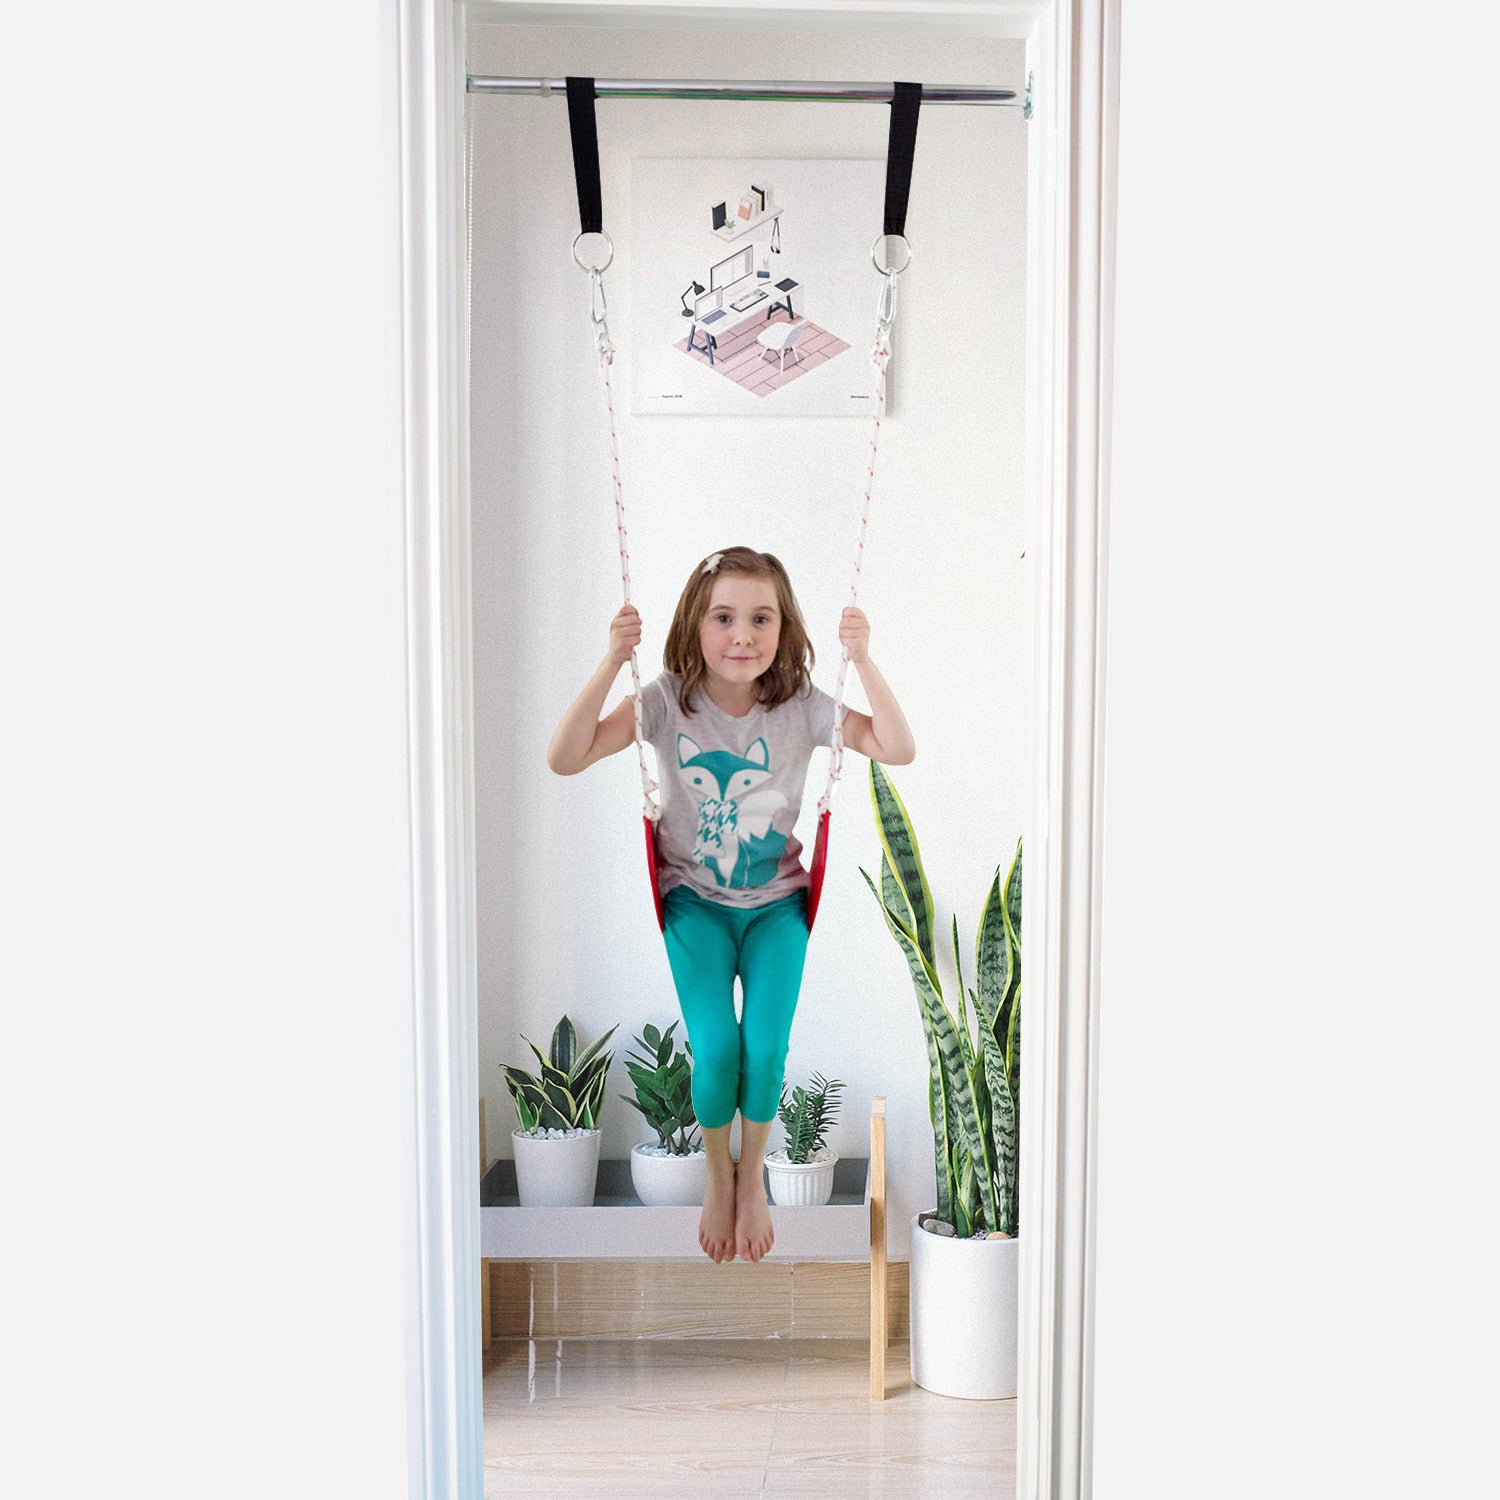 A girl is using doorway swing